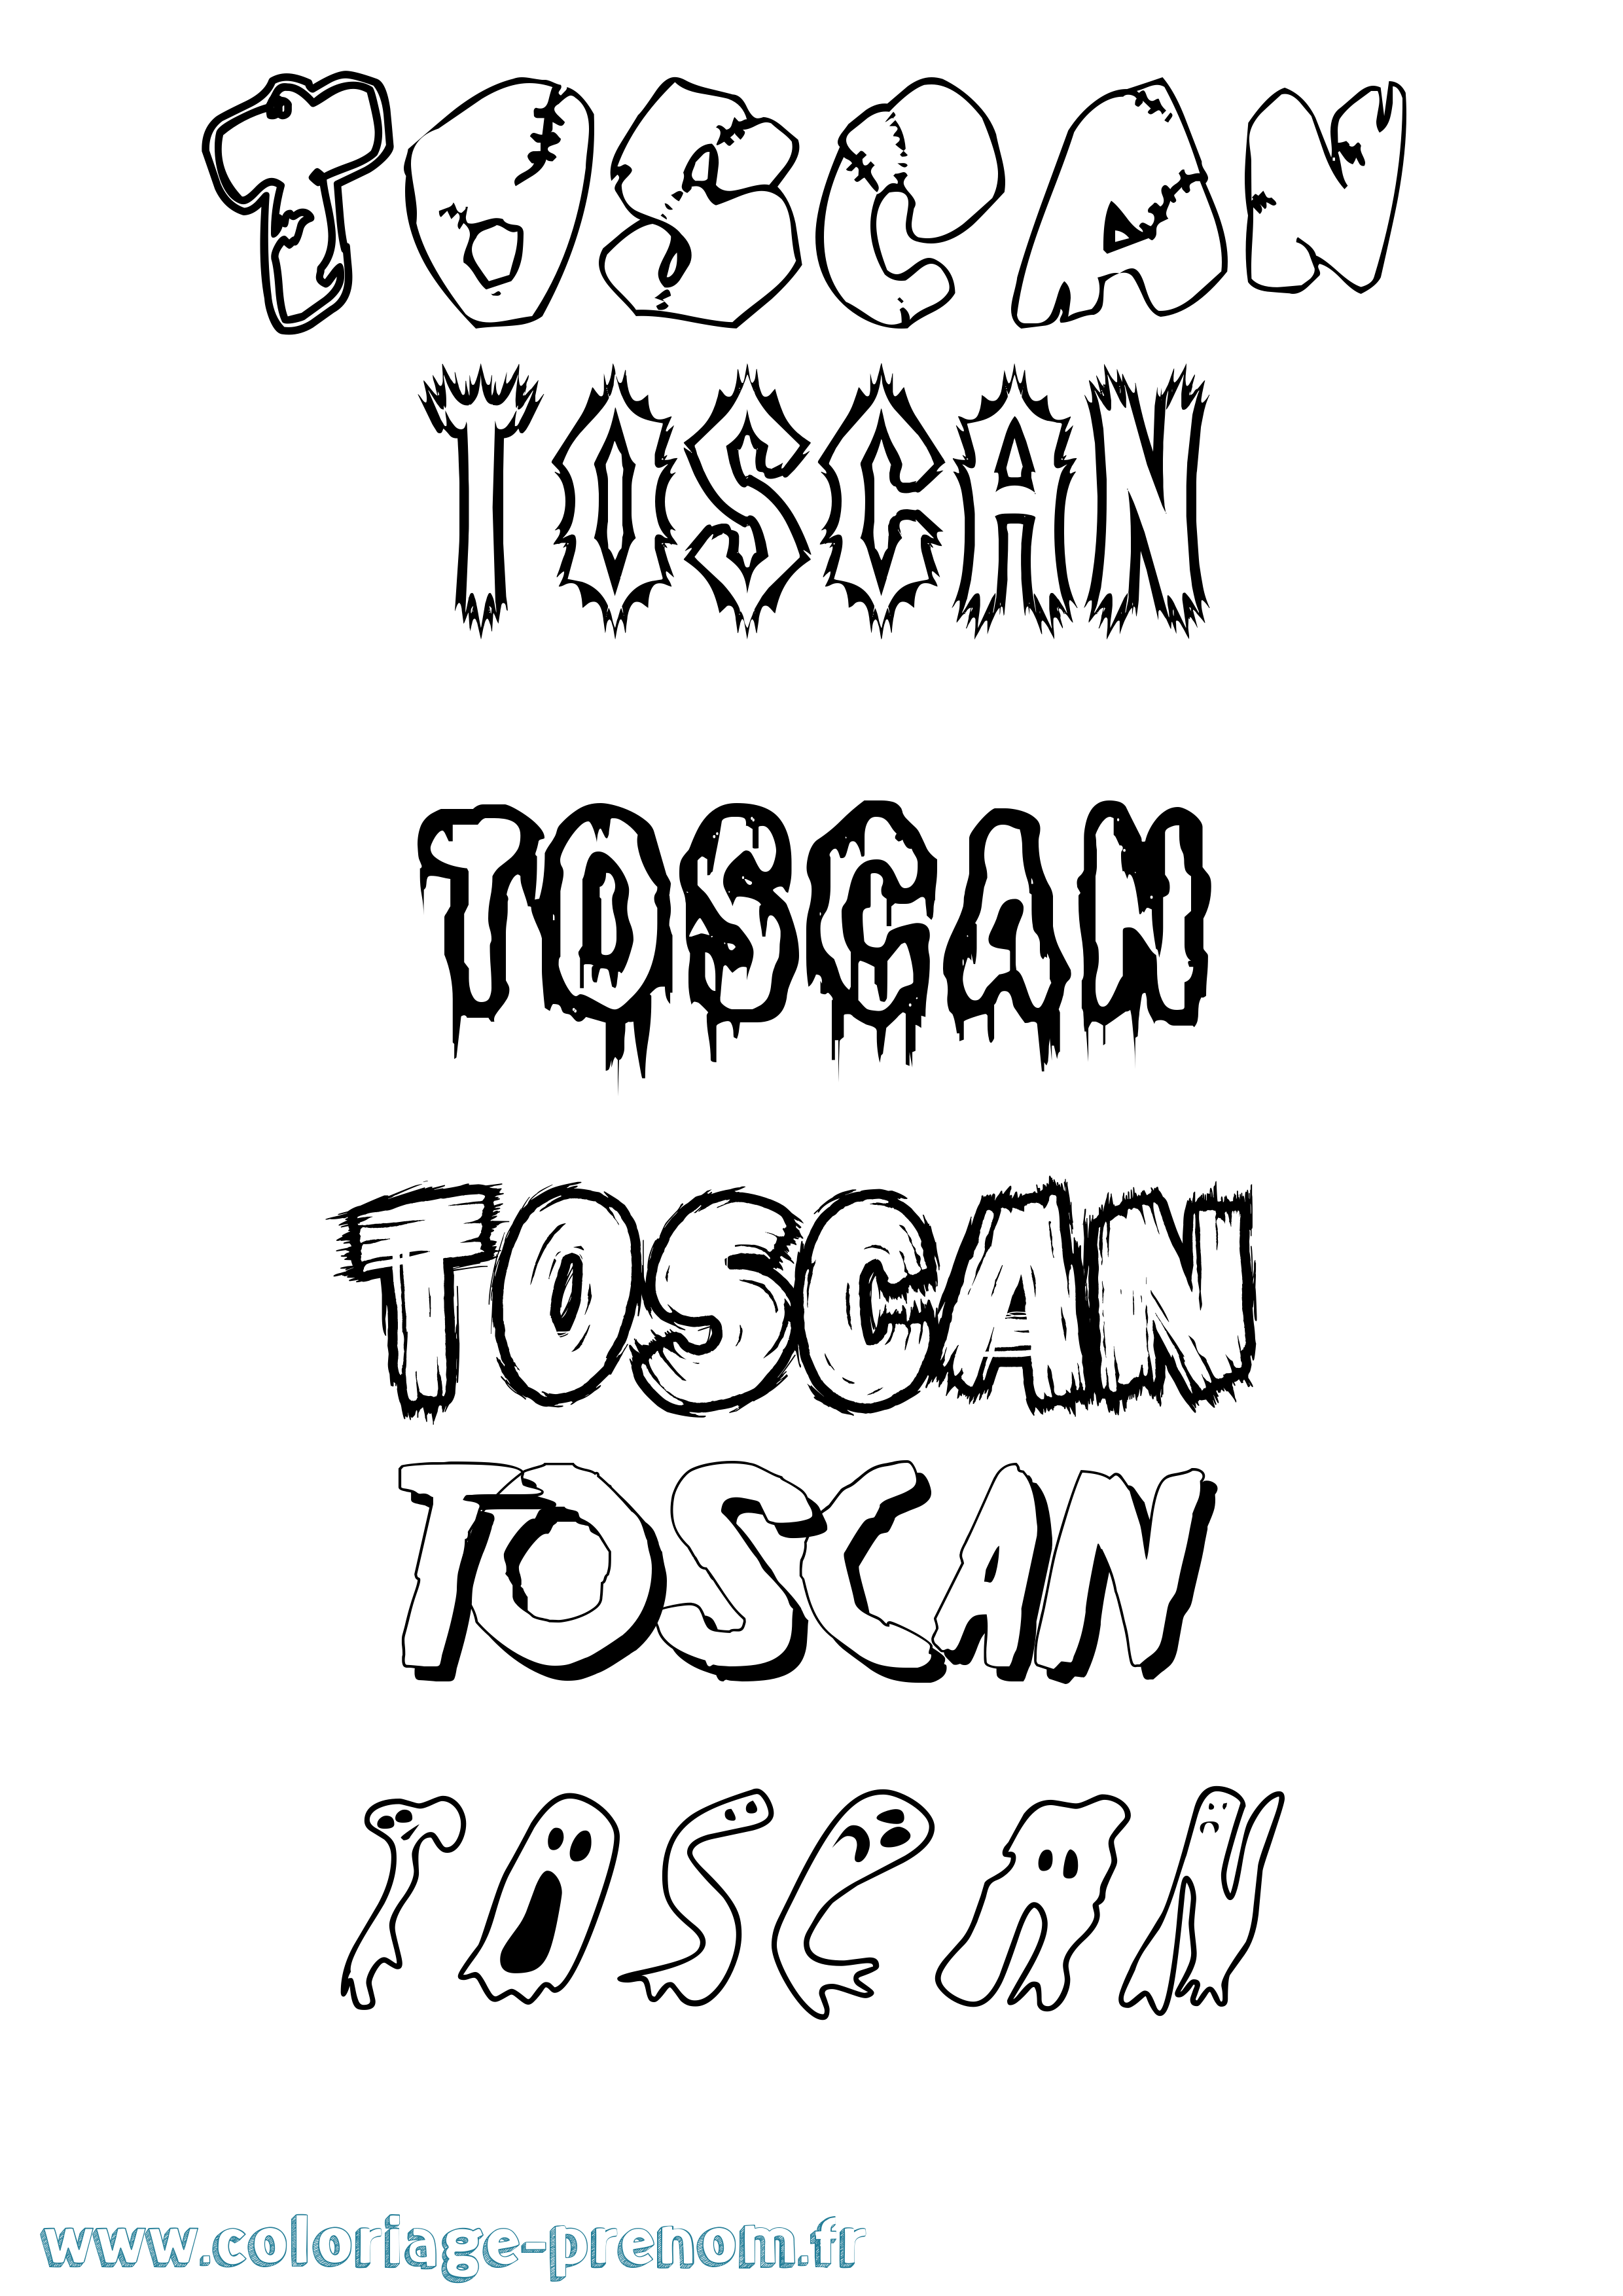 Coloriage prénom Toscan Frisson